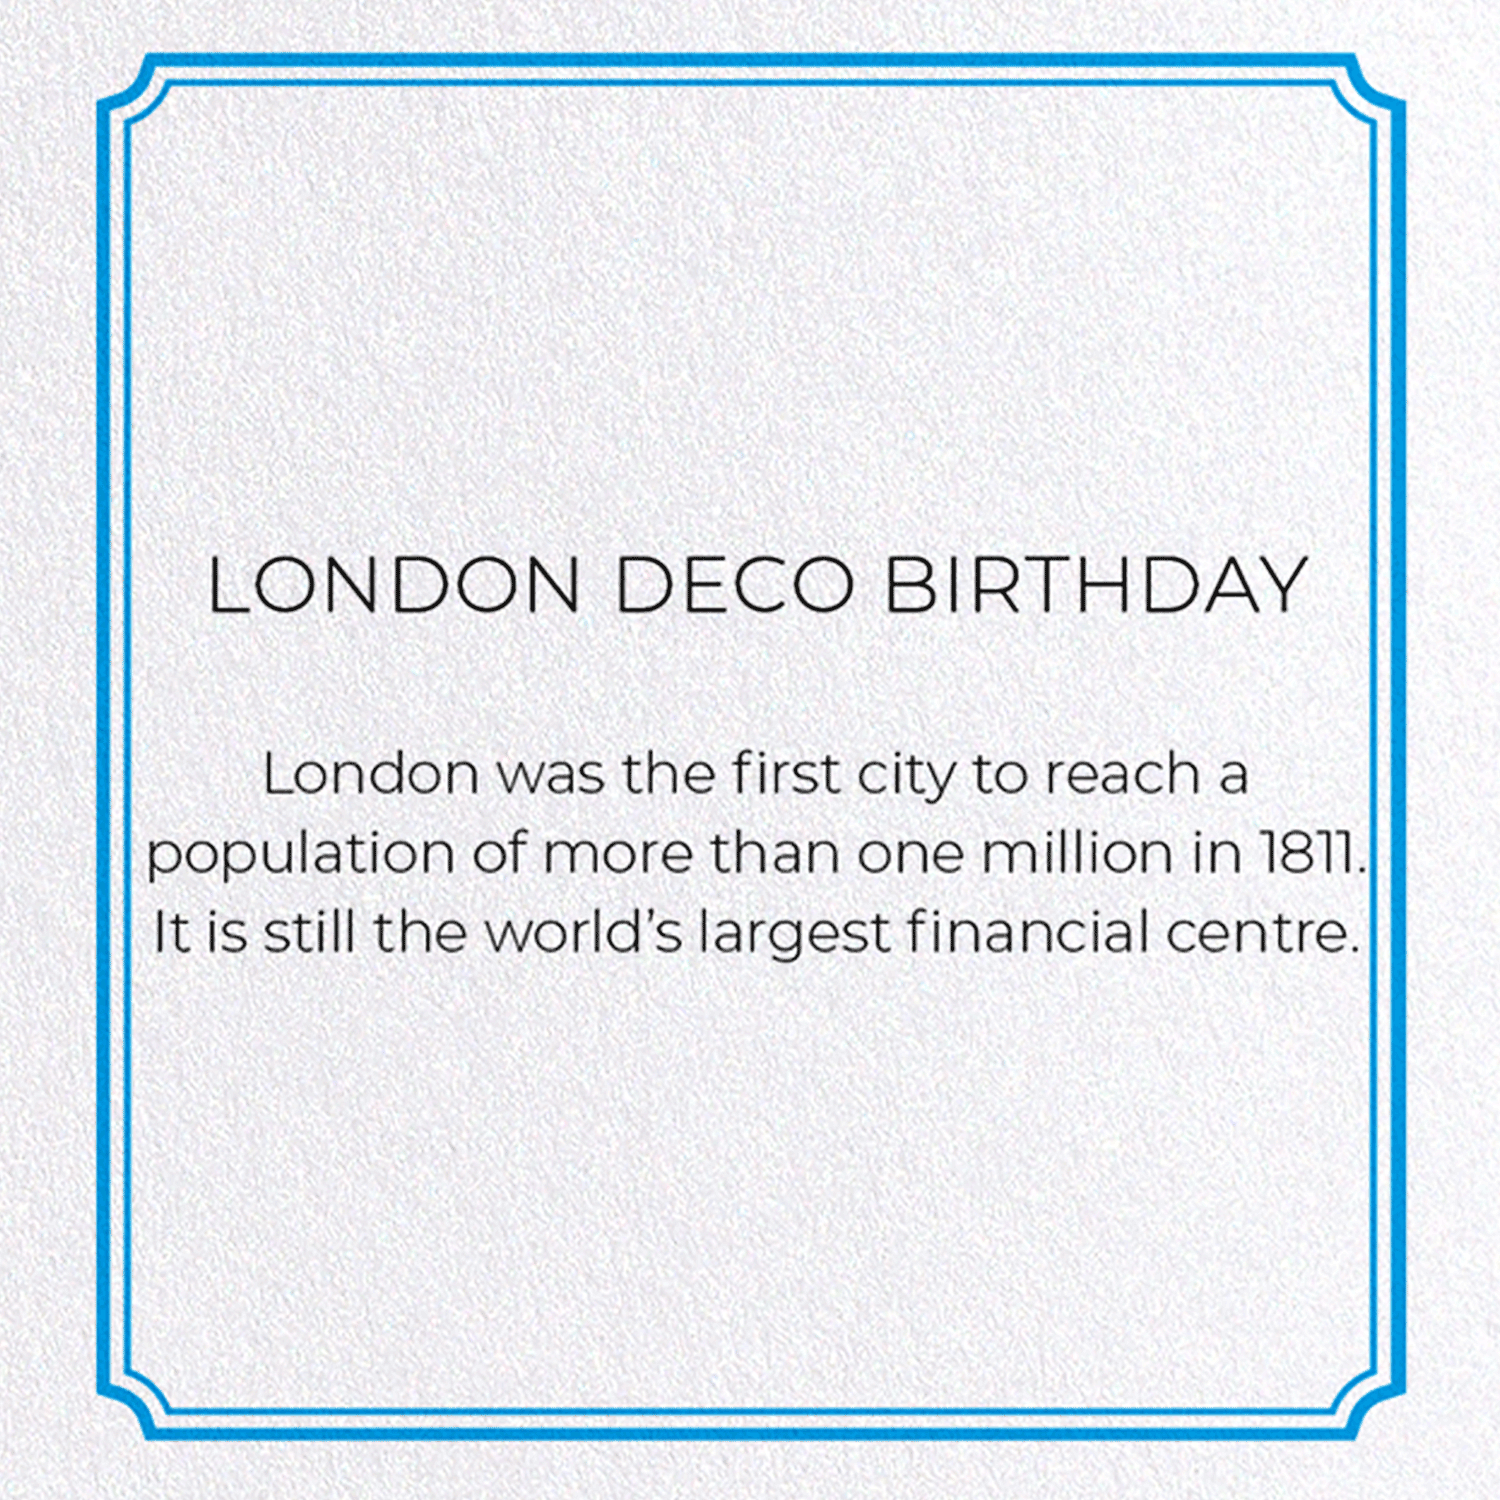 LONDON DECO BIRTHDAY: Modern deco Greeting Card